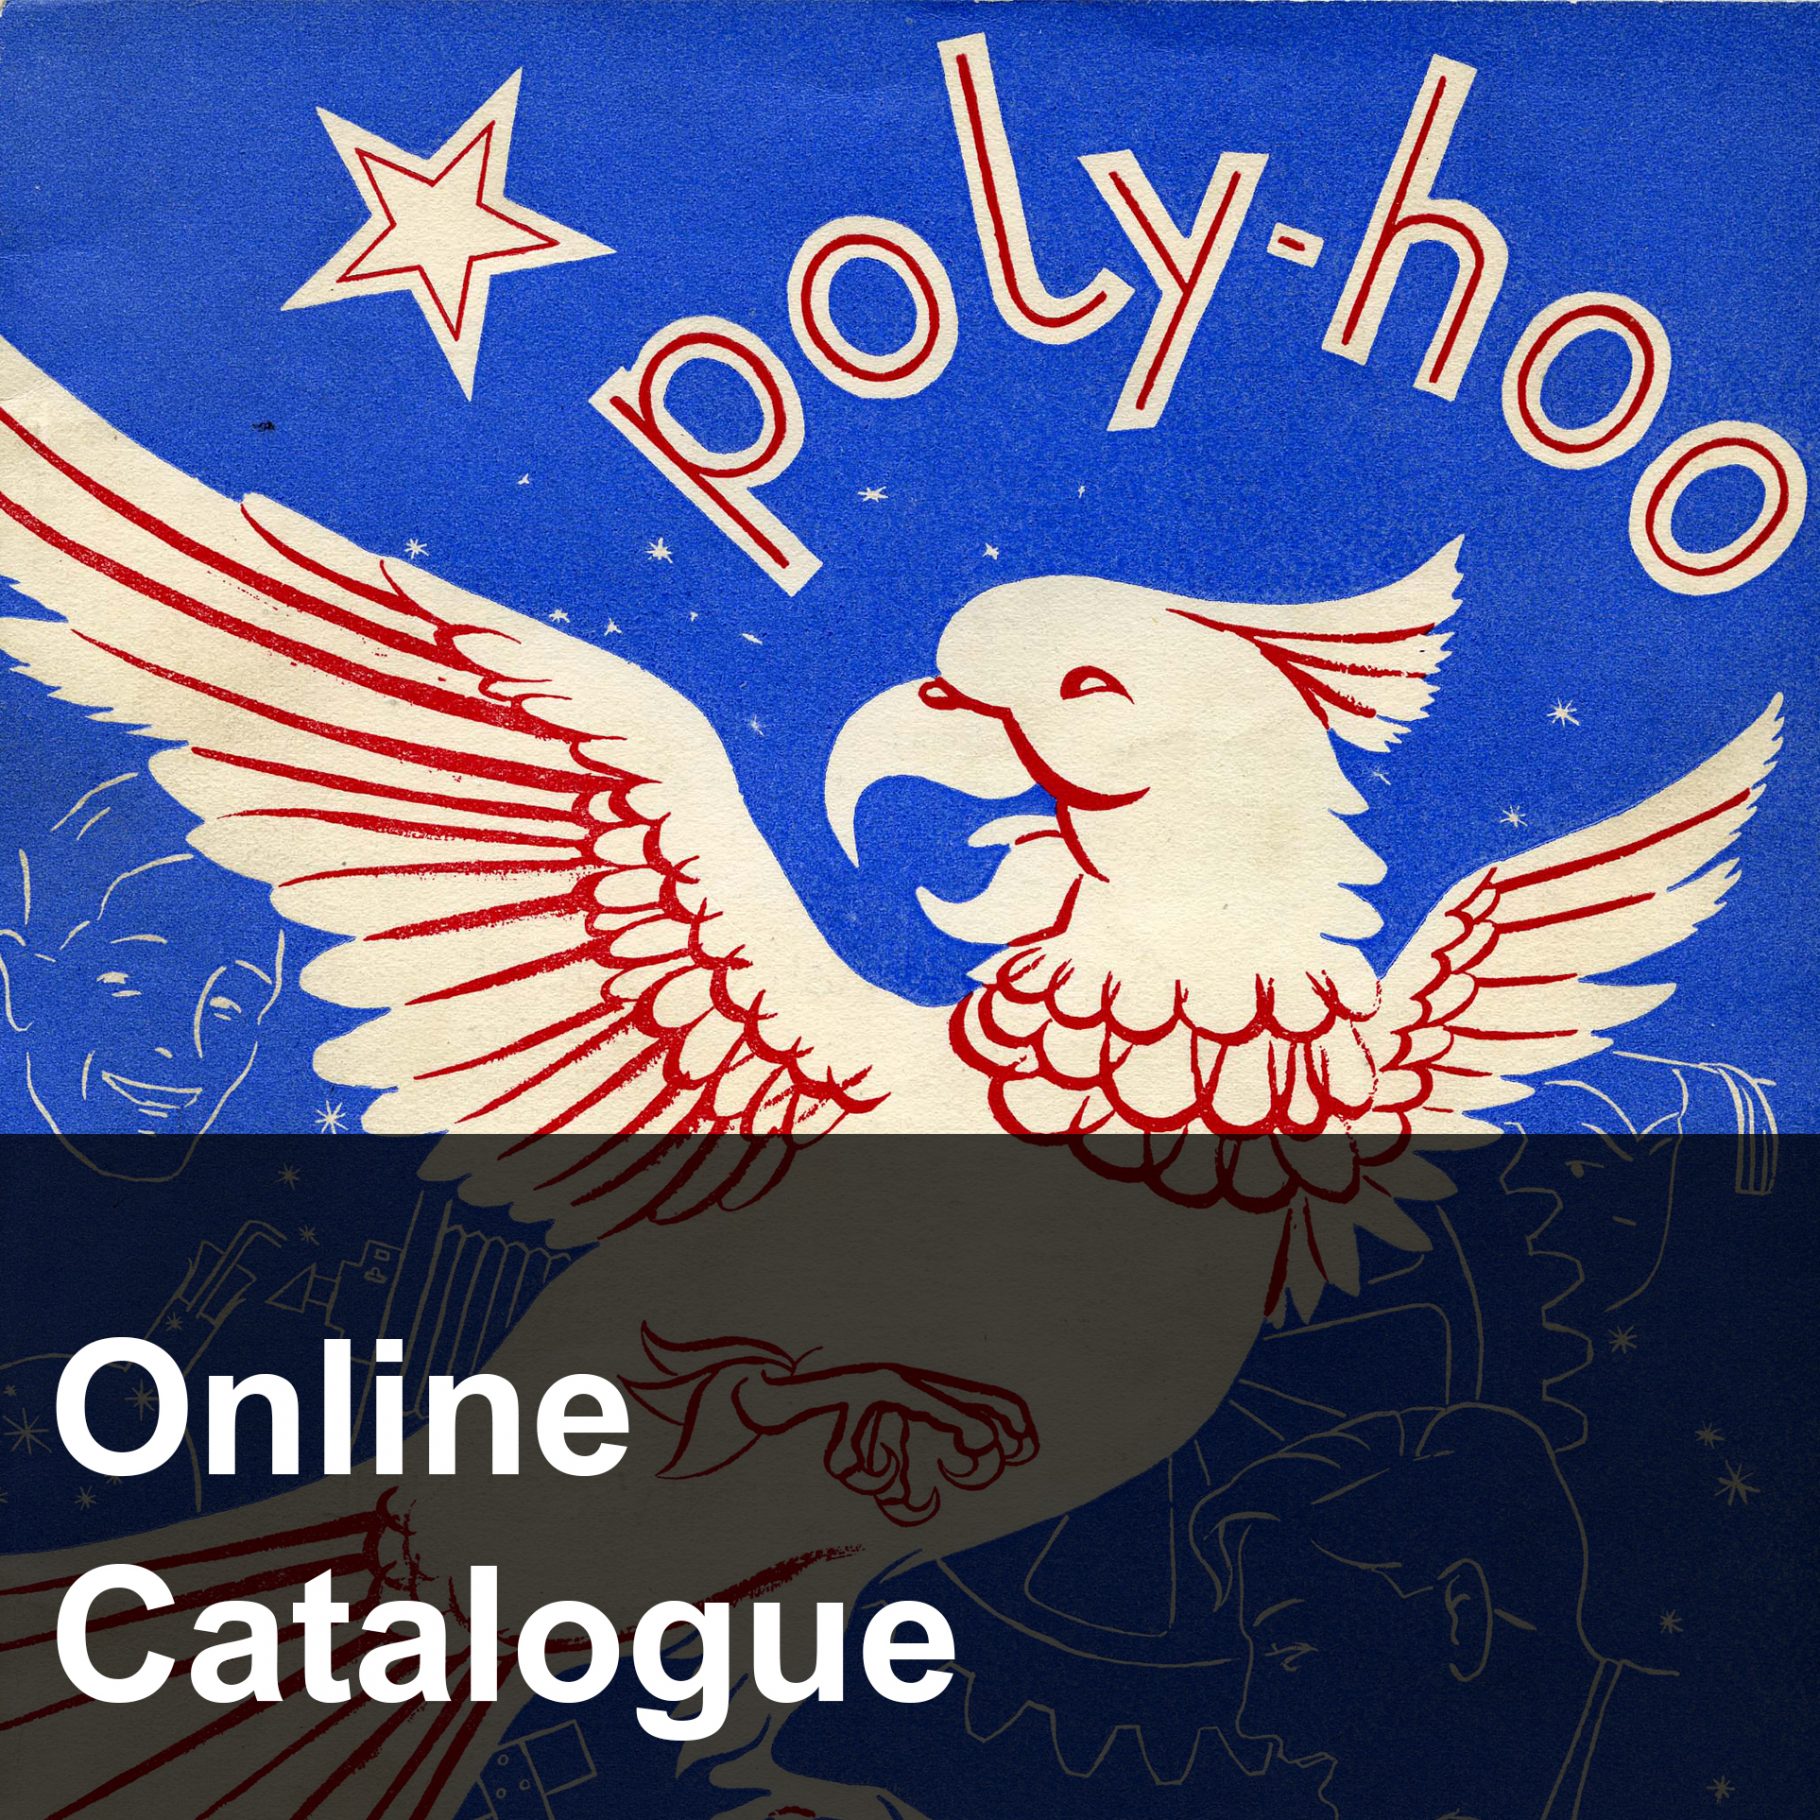 Online Catalogue button